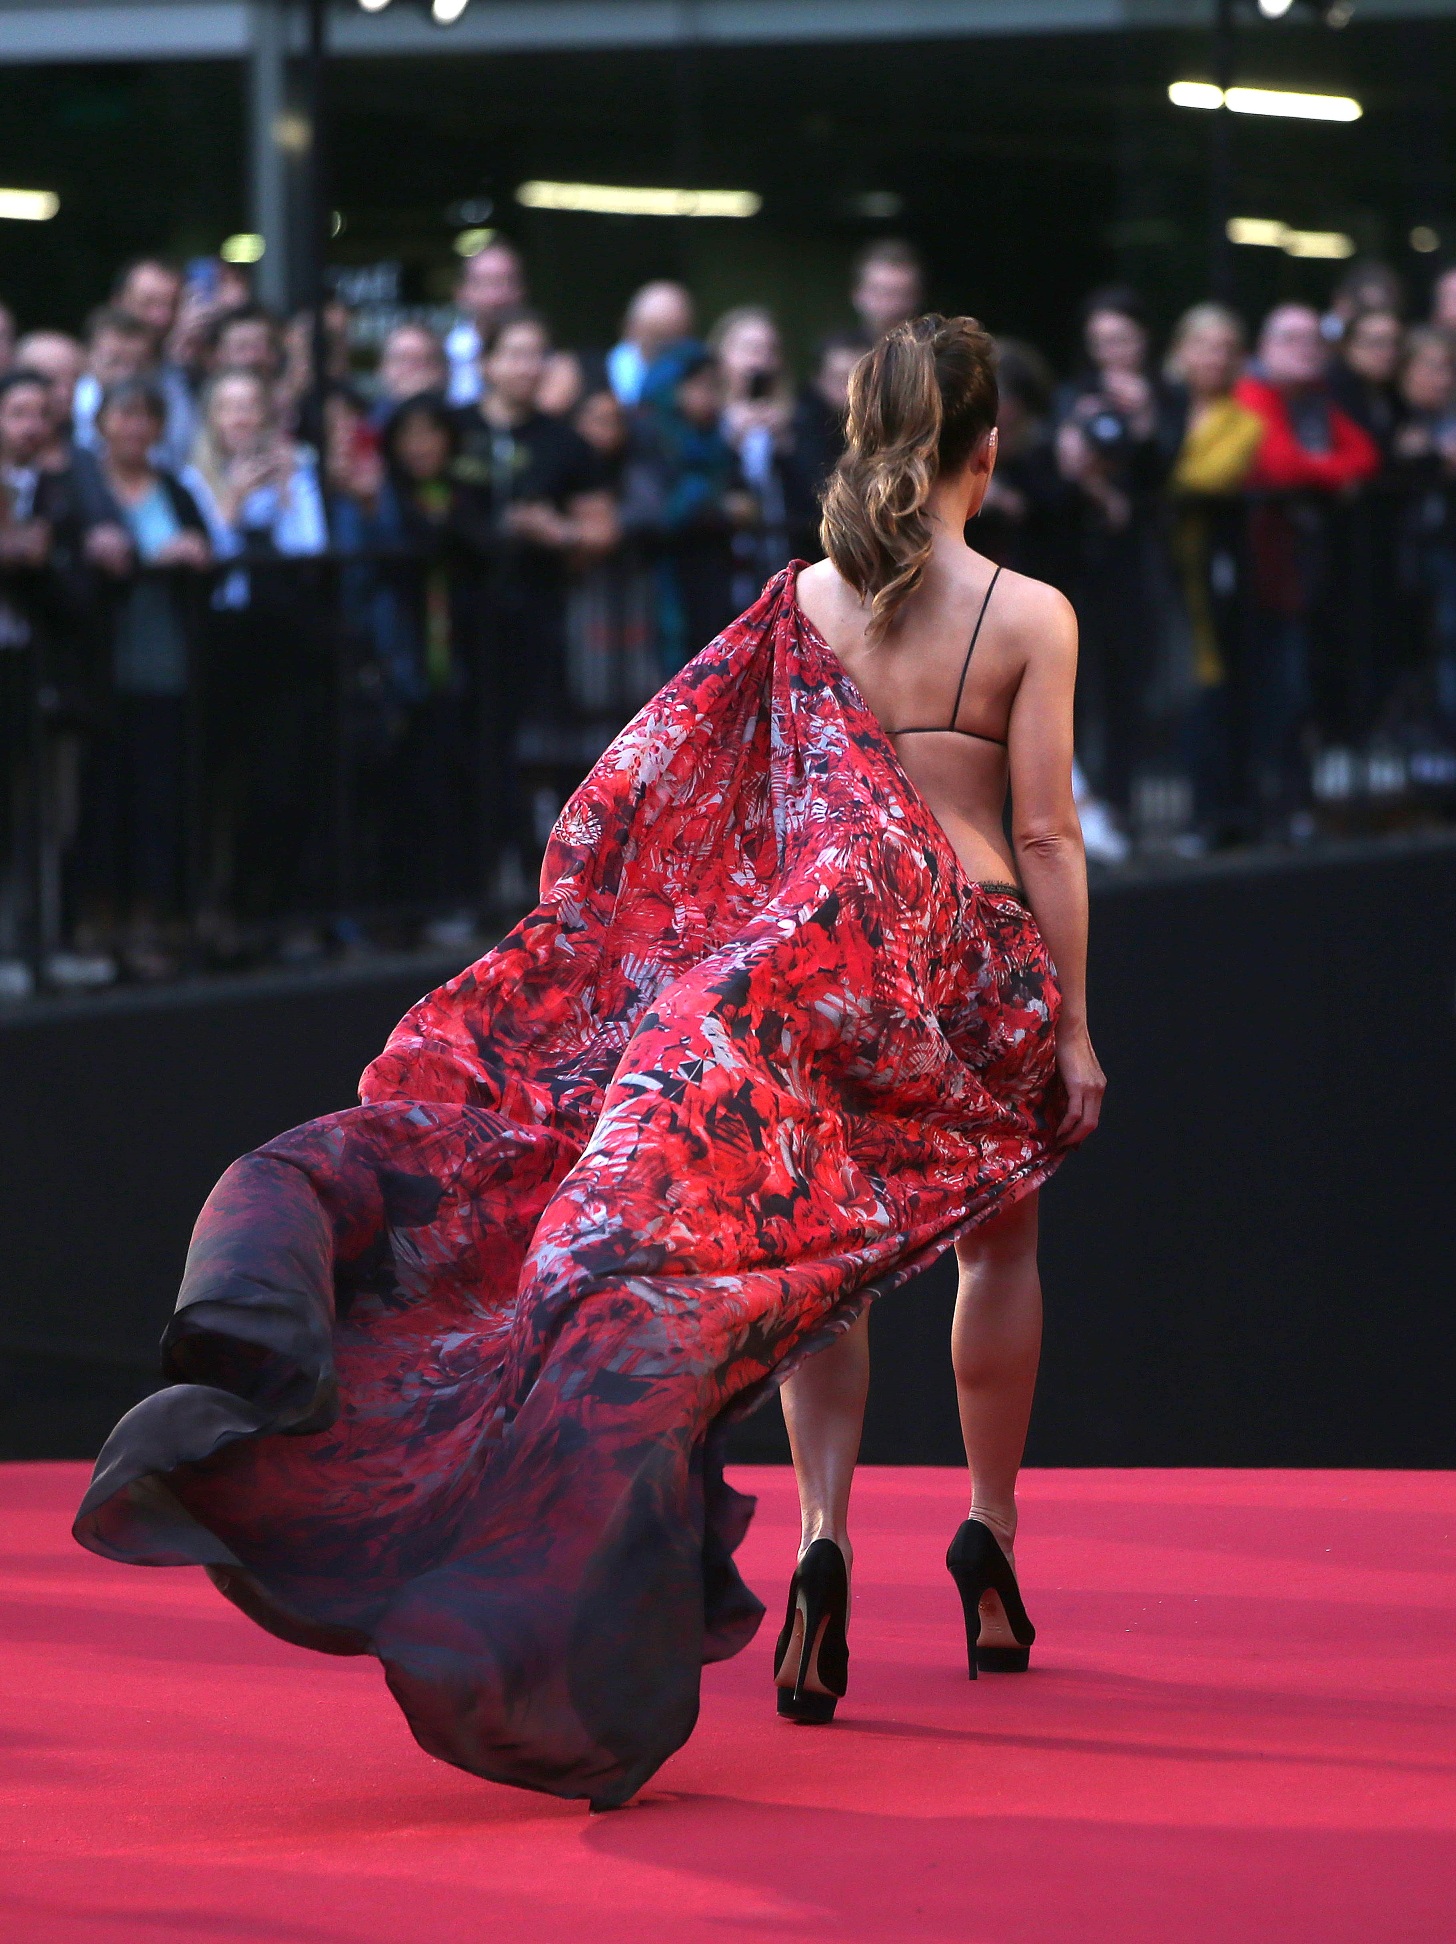 Kate Beckinsale Shocks With Huge Exposing Dress At An Awards Event Set 1